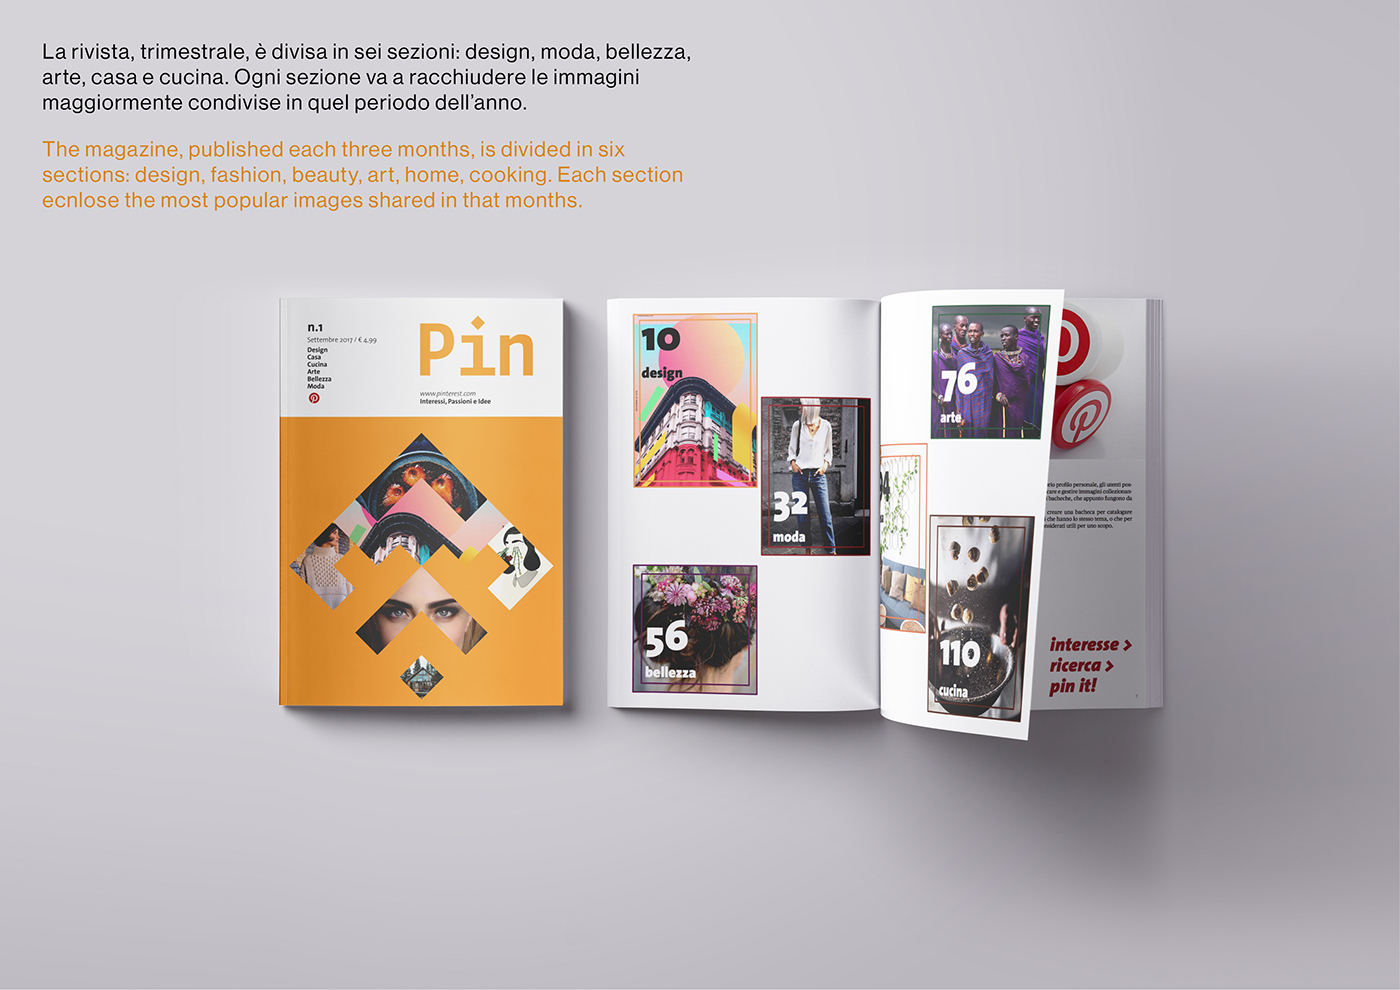 Pinterest magazine digital editorial design new personal iusve pin